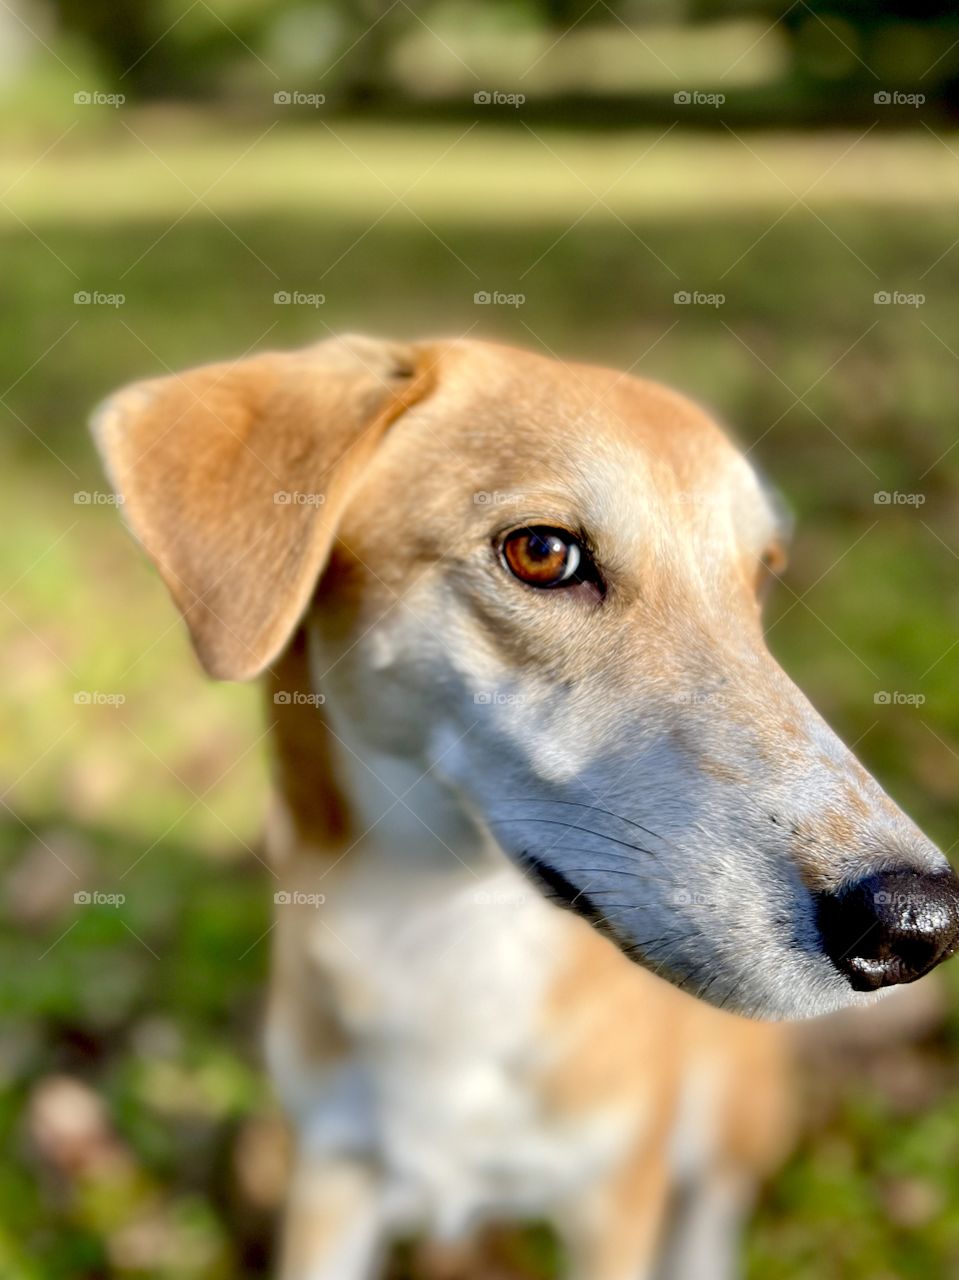 Pretty hound dog giving side eye to camera 